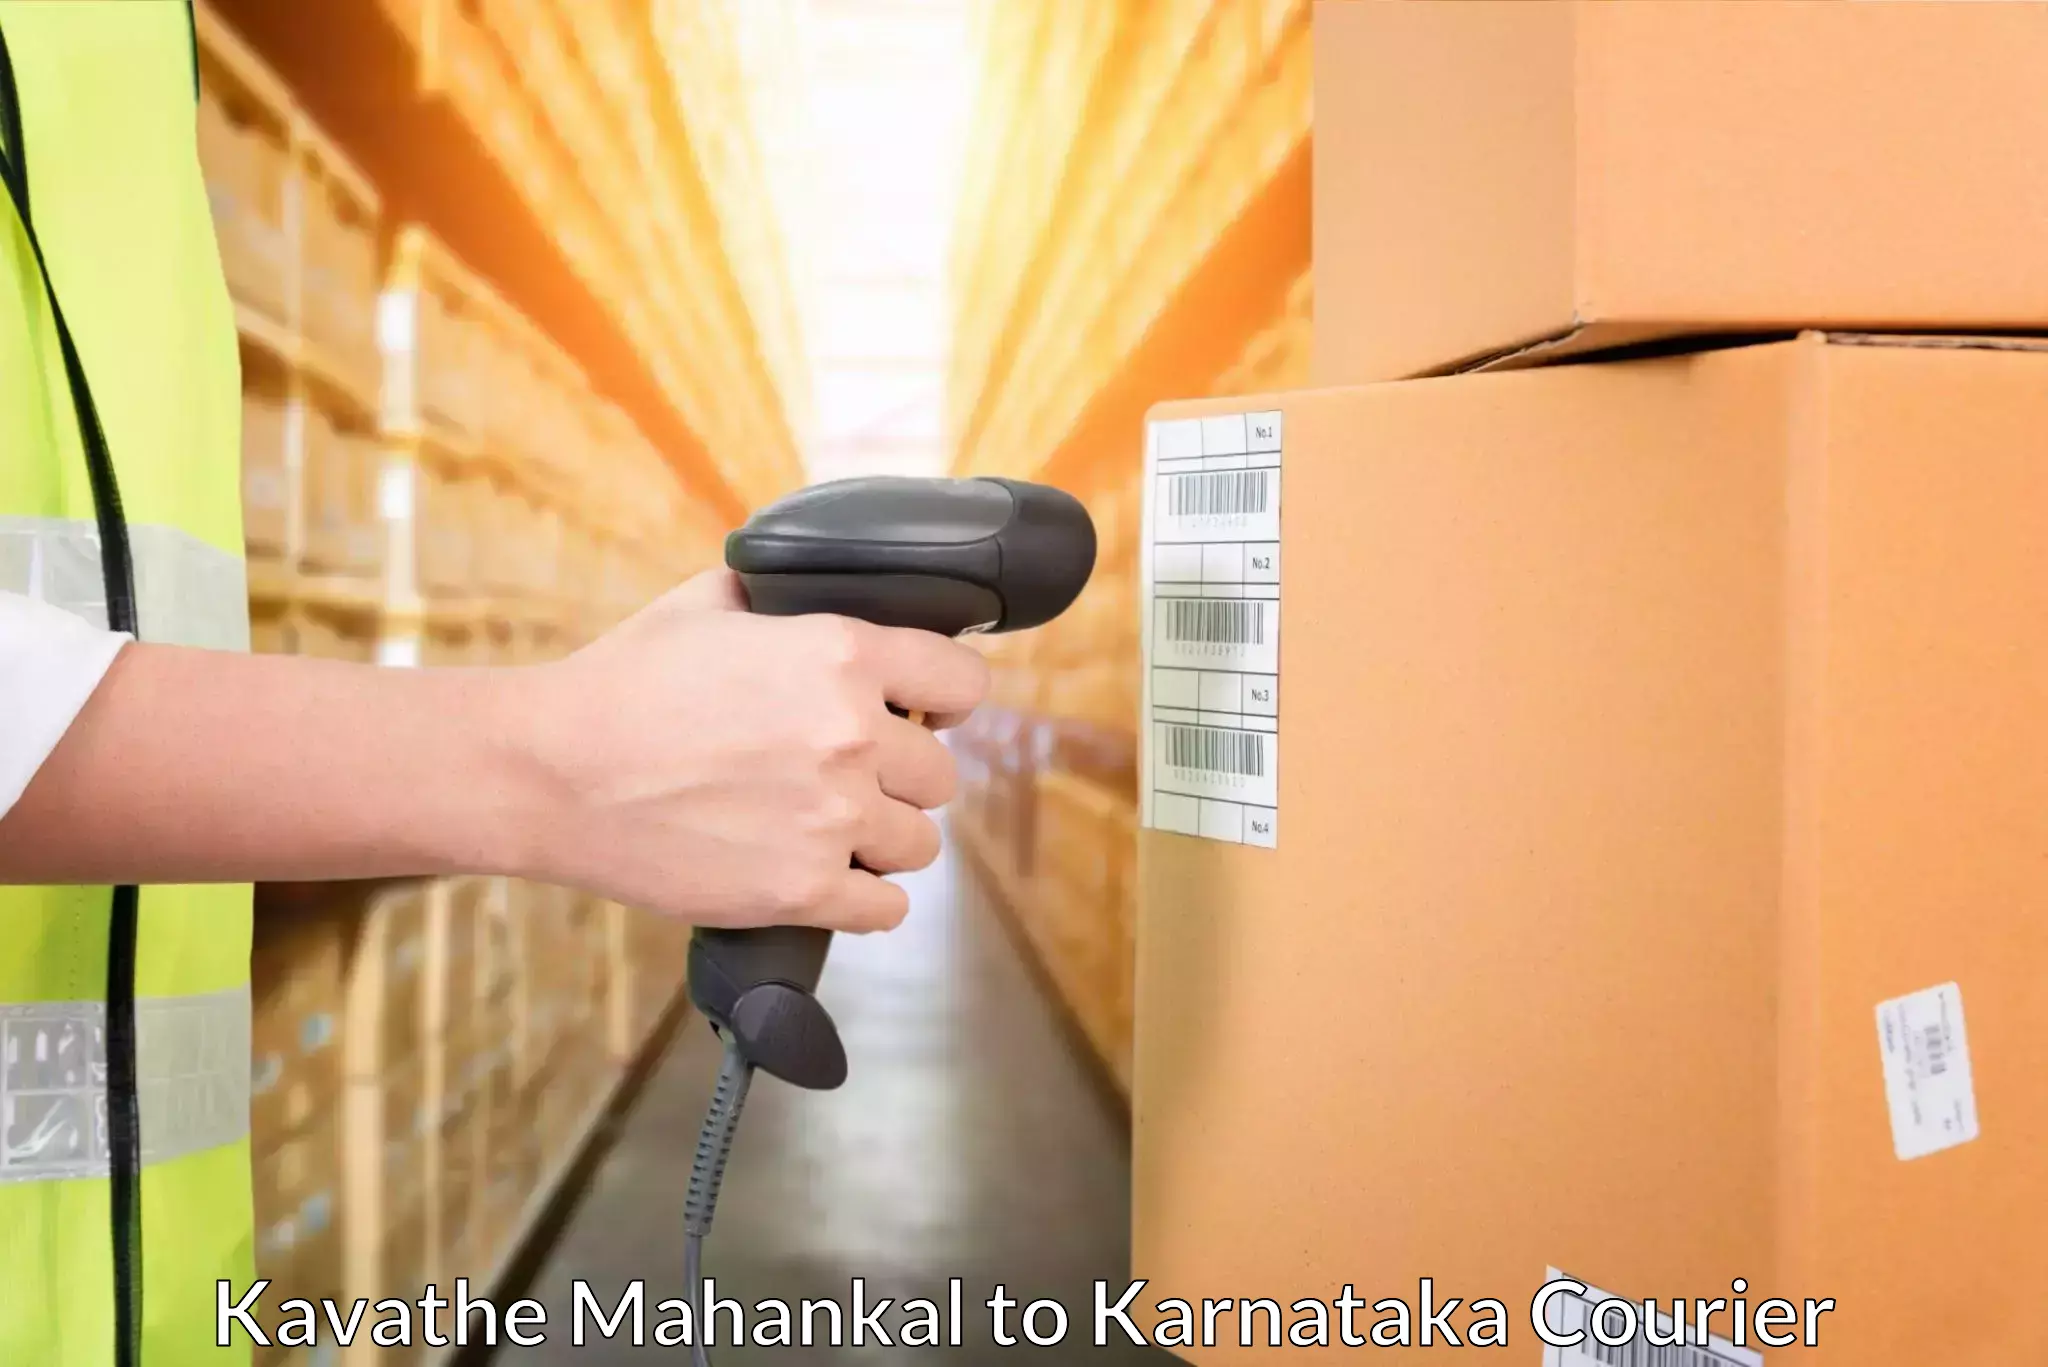 Express courier facilities Kavathe Mahankal to Kanakapura